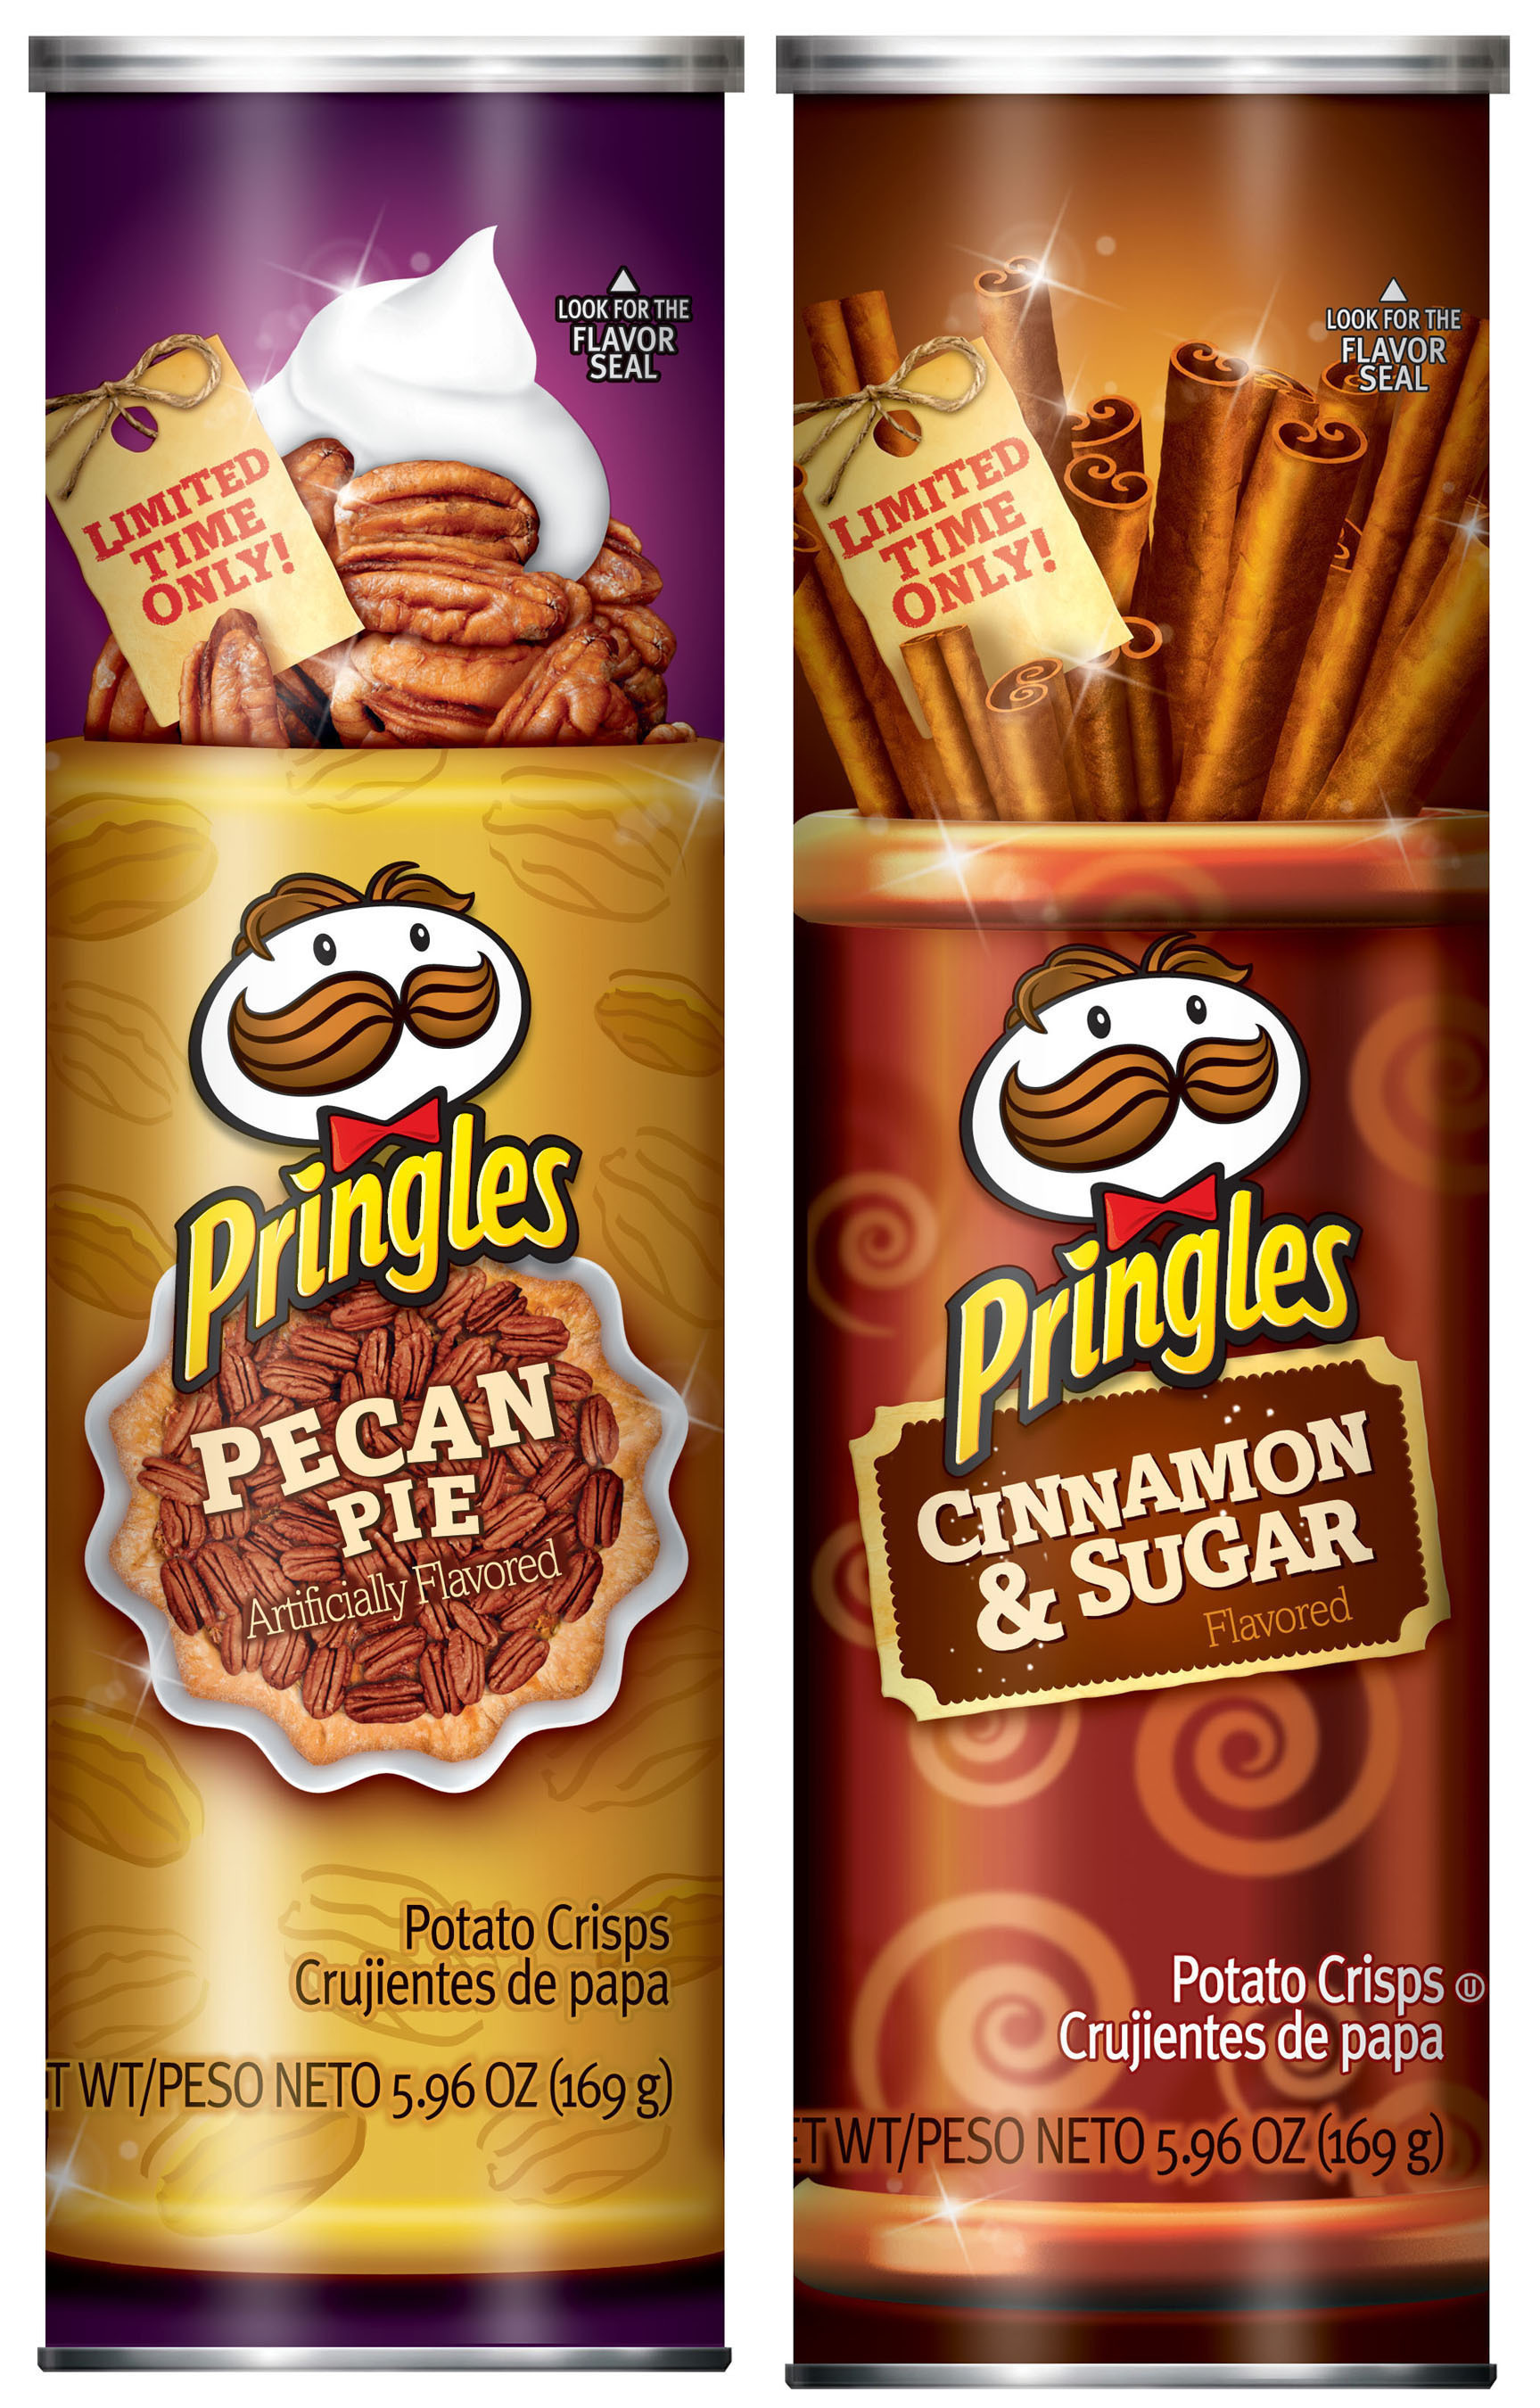 Pringles Pecan Pie and Cinnamon & Sugar Holiday Flavors. (PRNewsFoto/Kellogg Company) (PRNewsFoto/KELLOGG COMPANY)